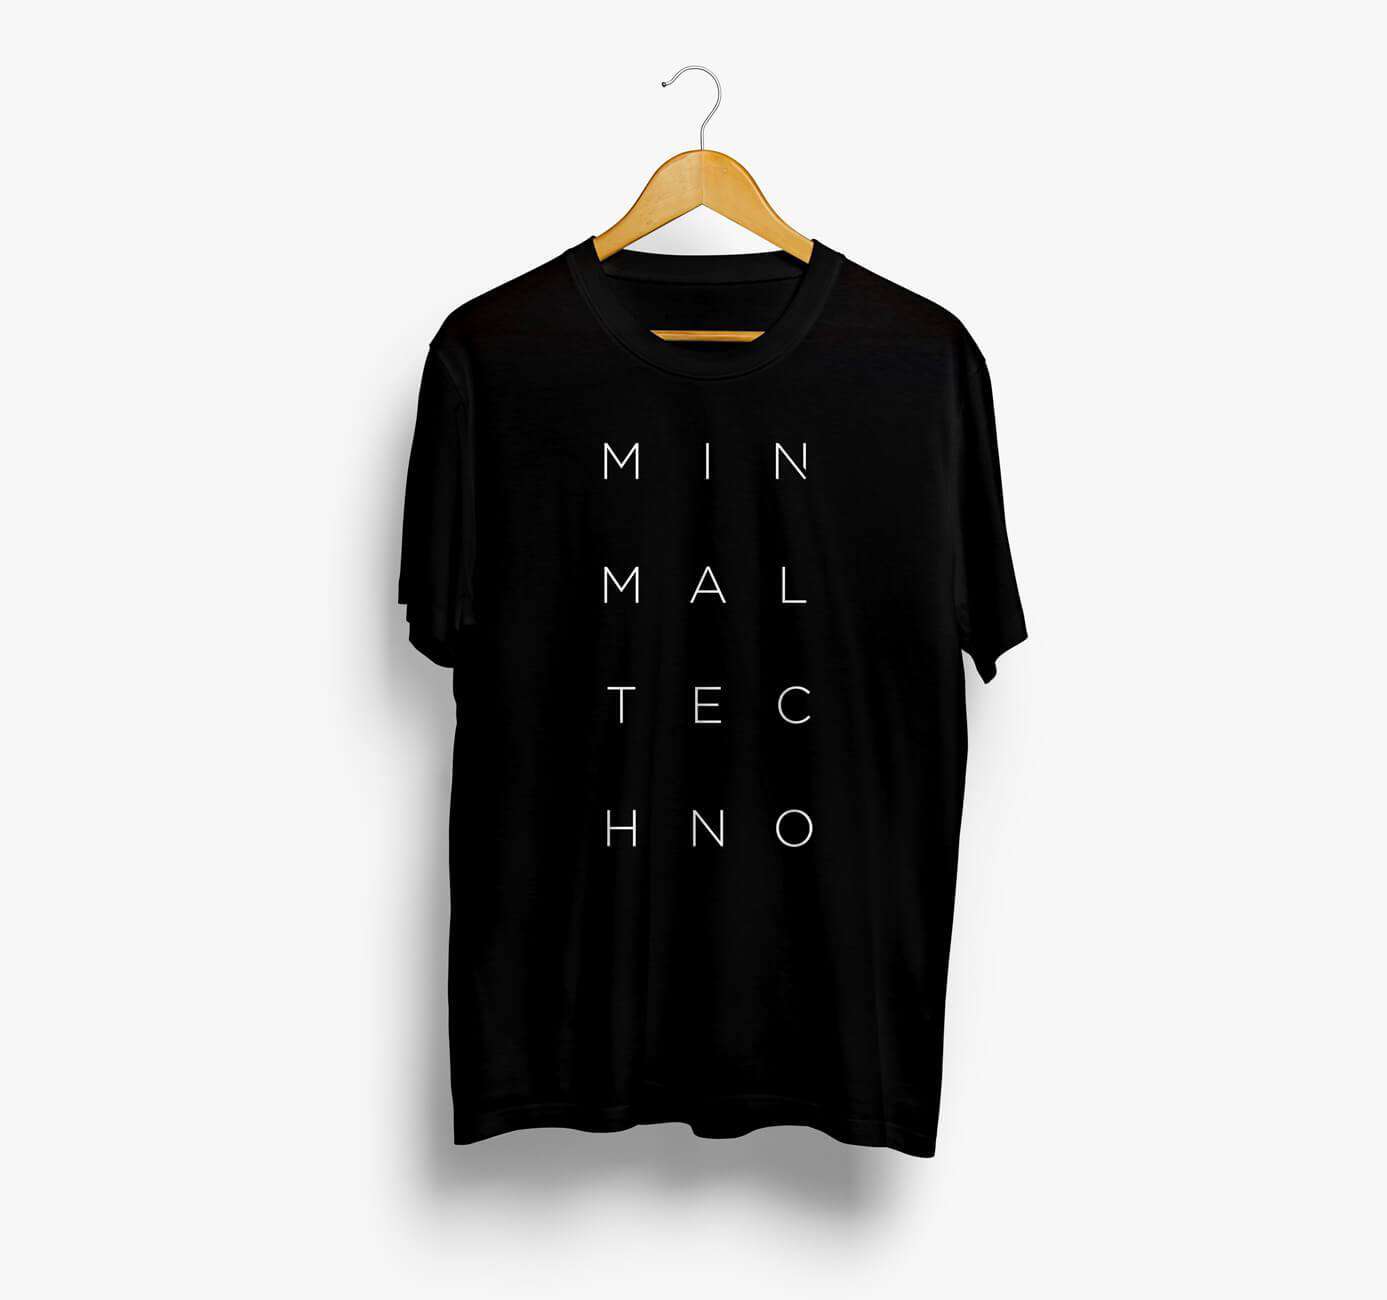 Minimal Techno T-Shirt